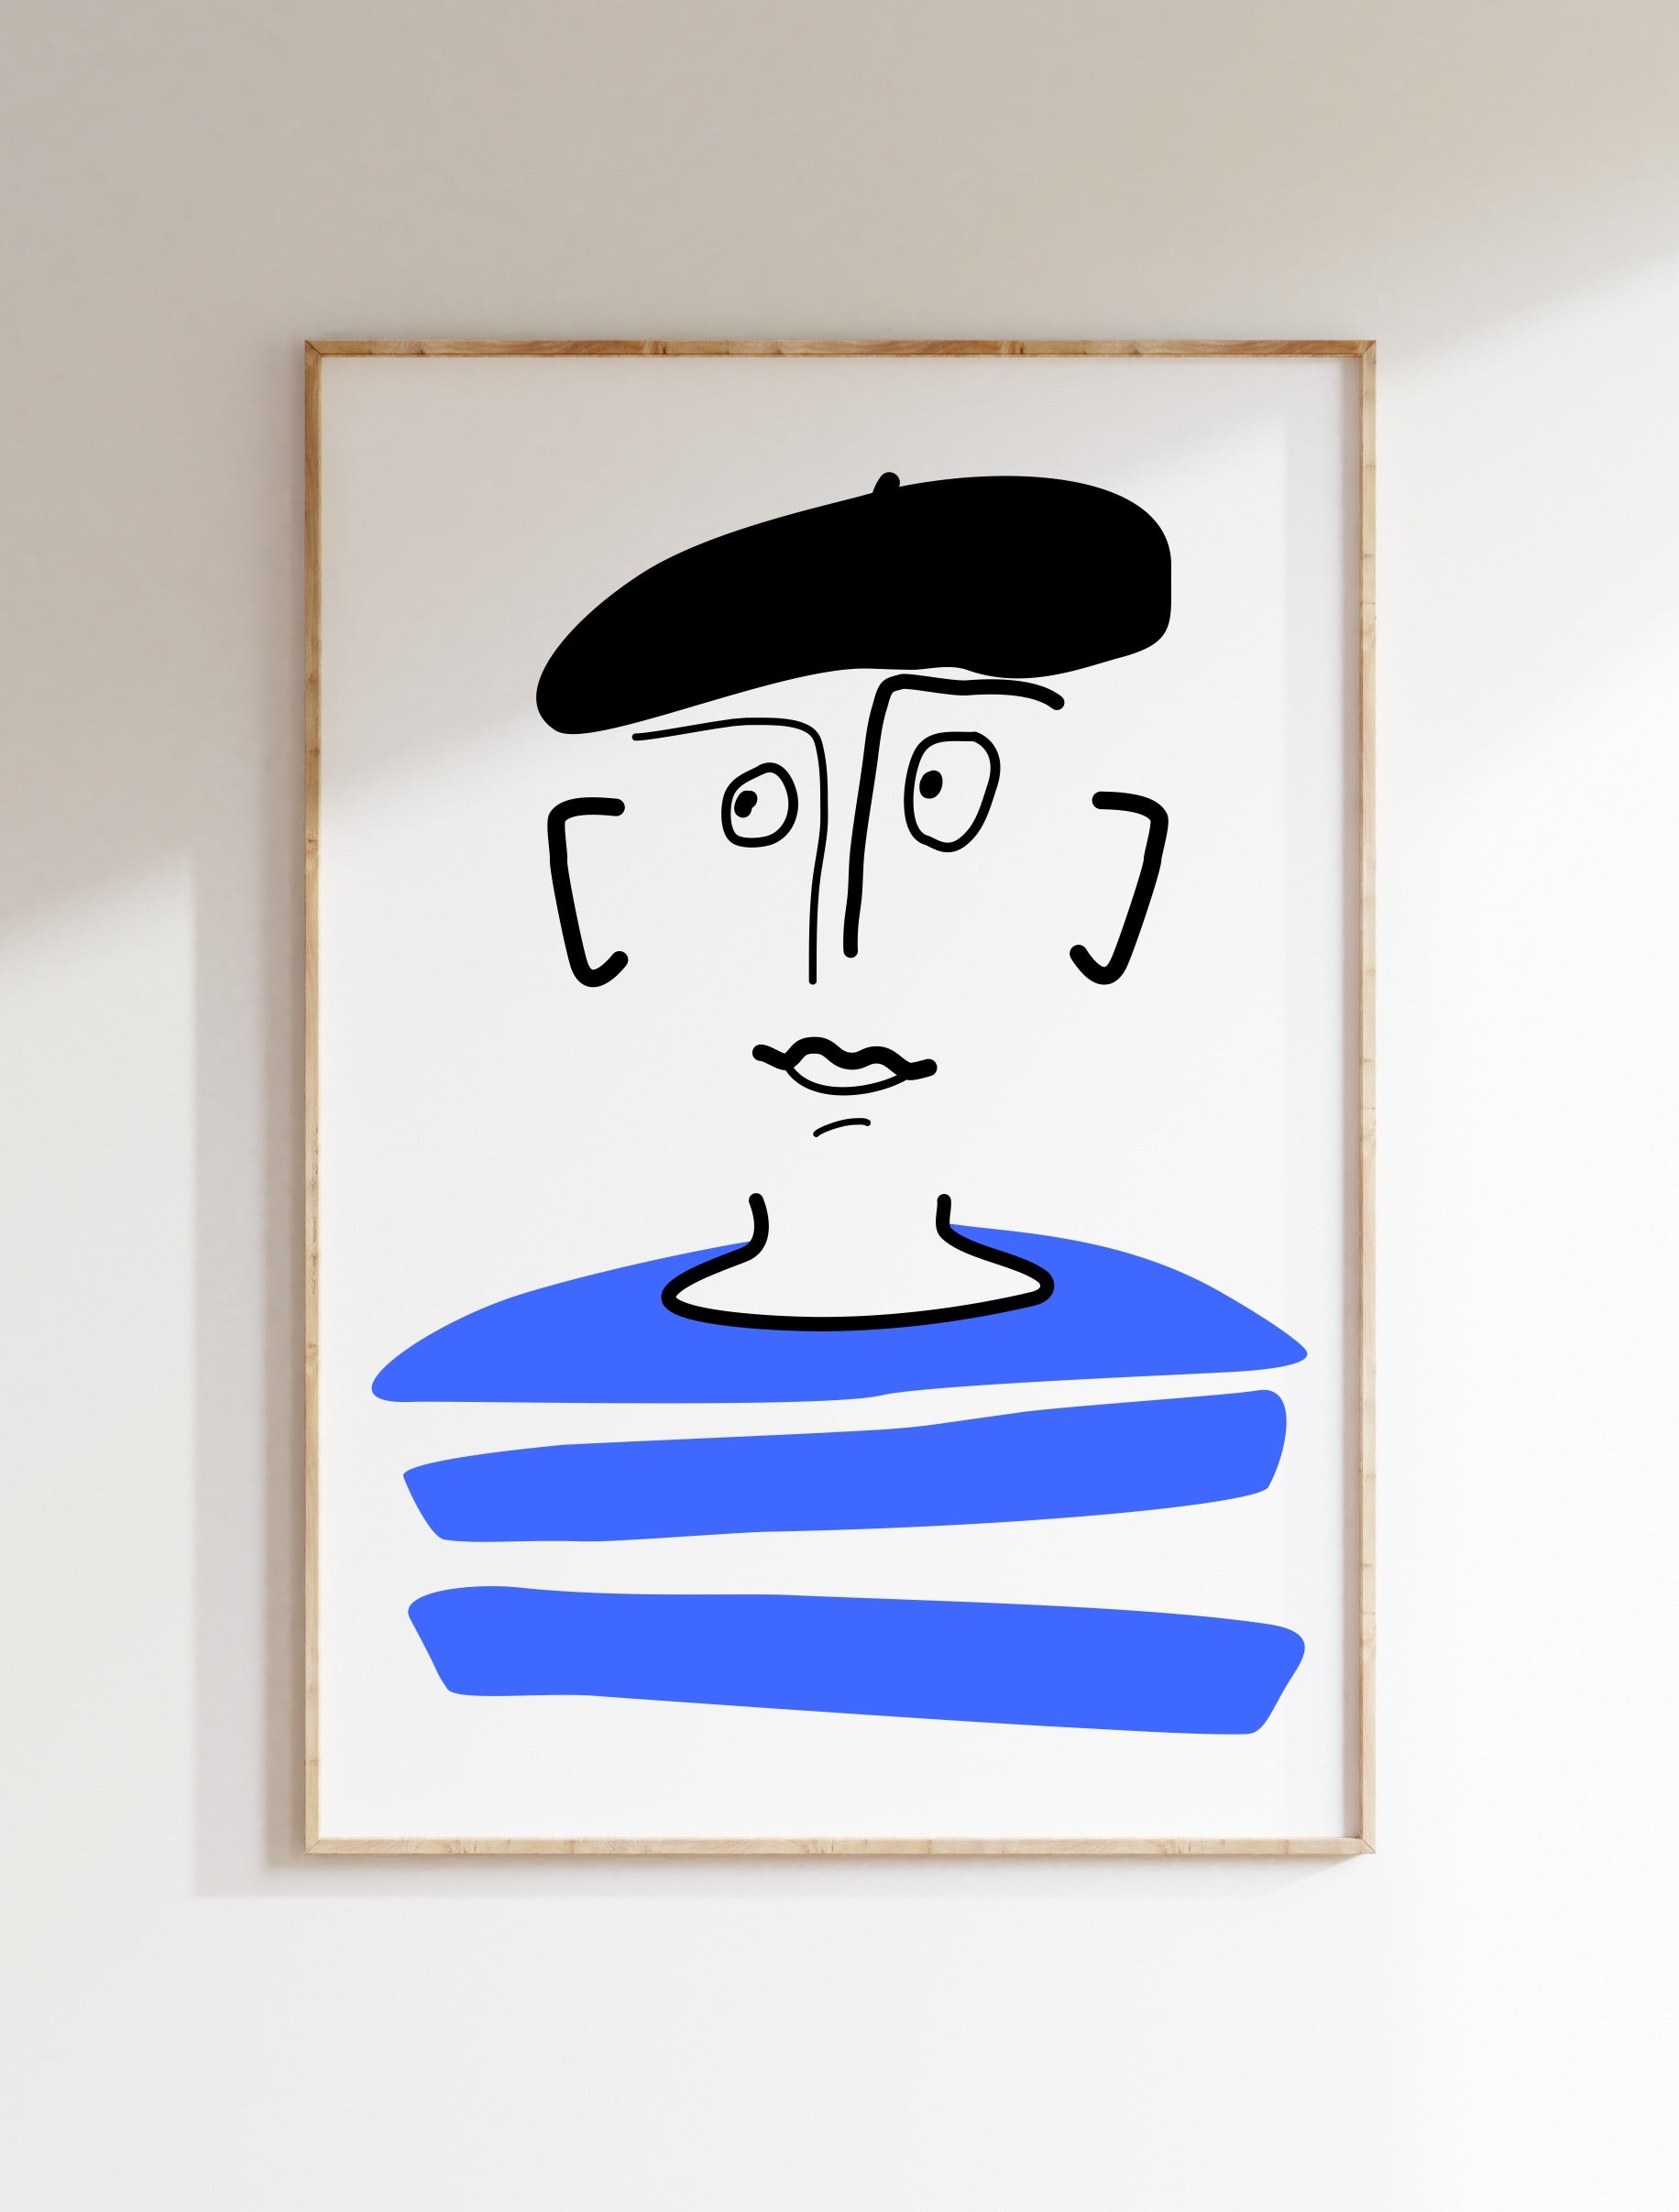 French Frank art print. Joyful, sustainable print designed by Three Round Boats